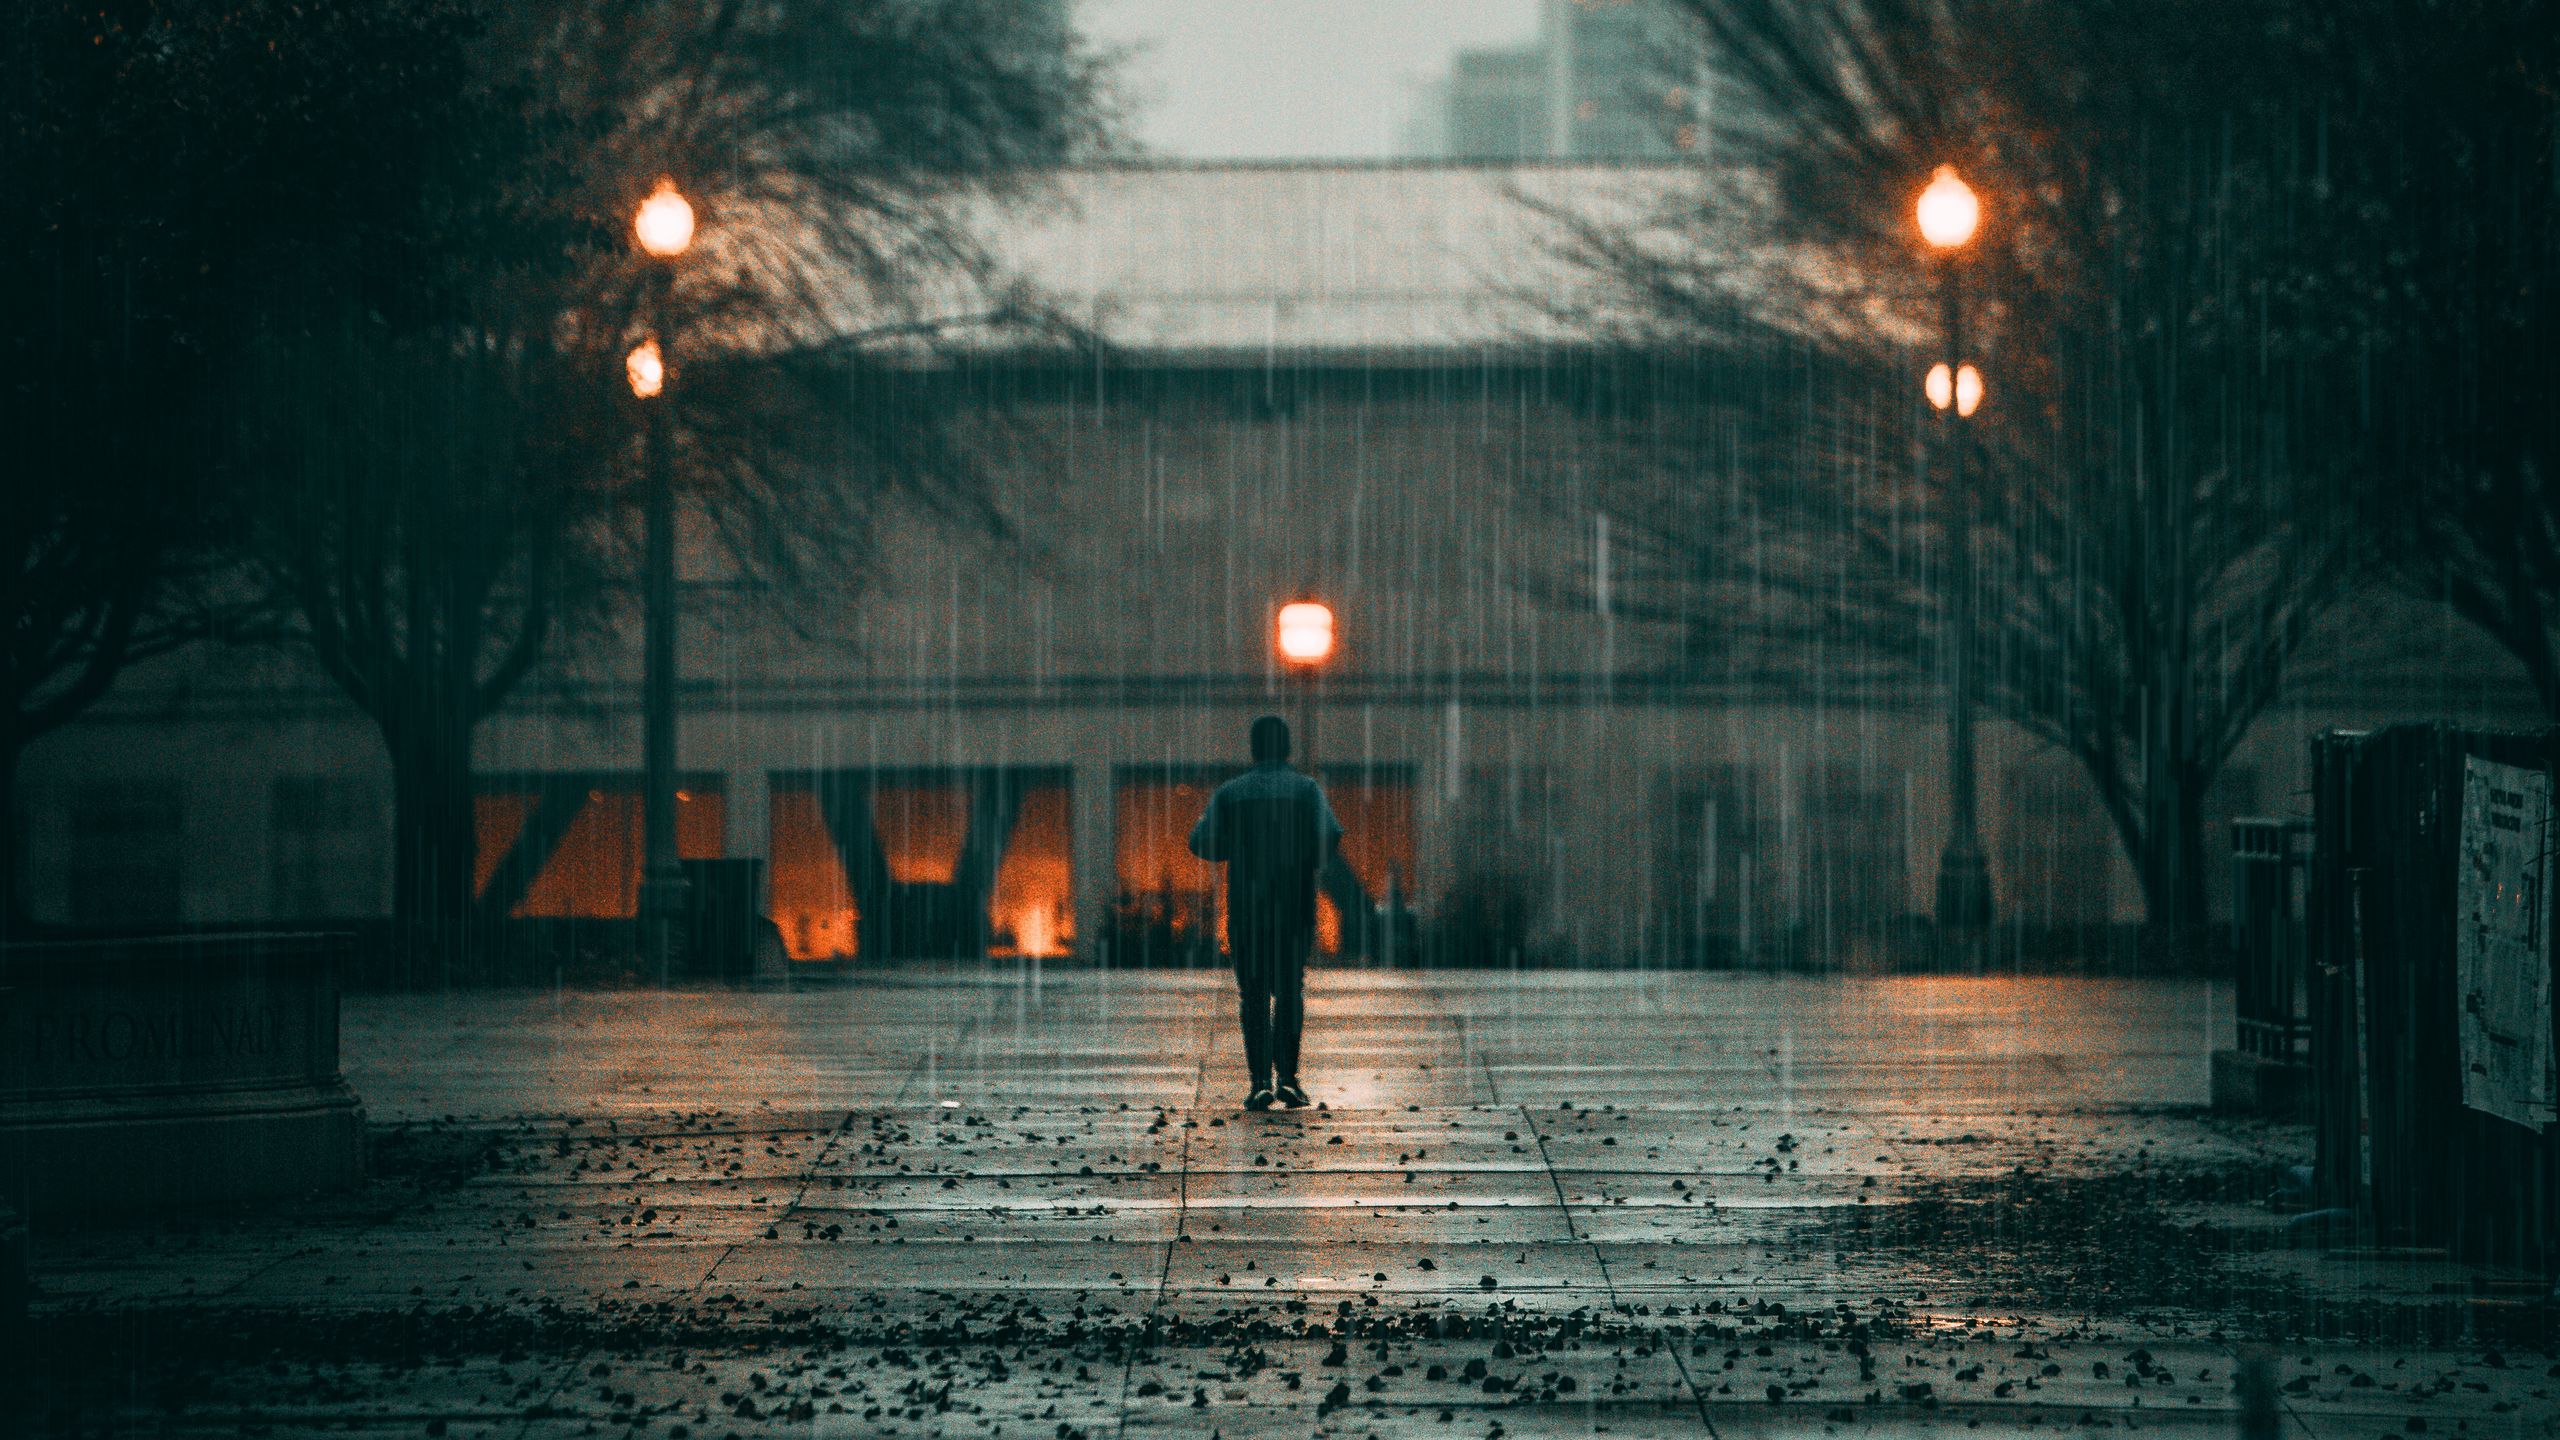 Download wallpaper 2560x1440 man, rain, loneliness, sad, walk, street, city widescreen 16:9 HD background